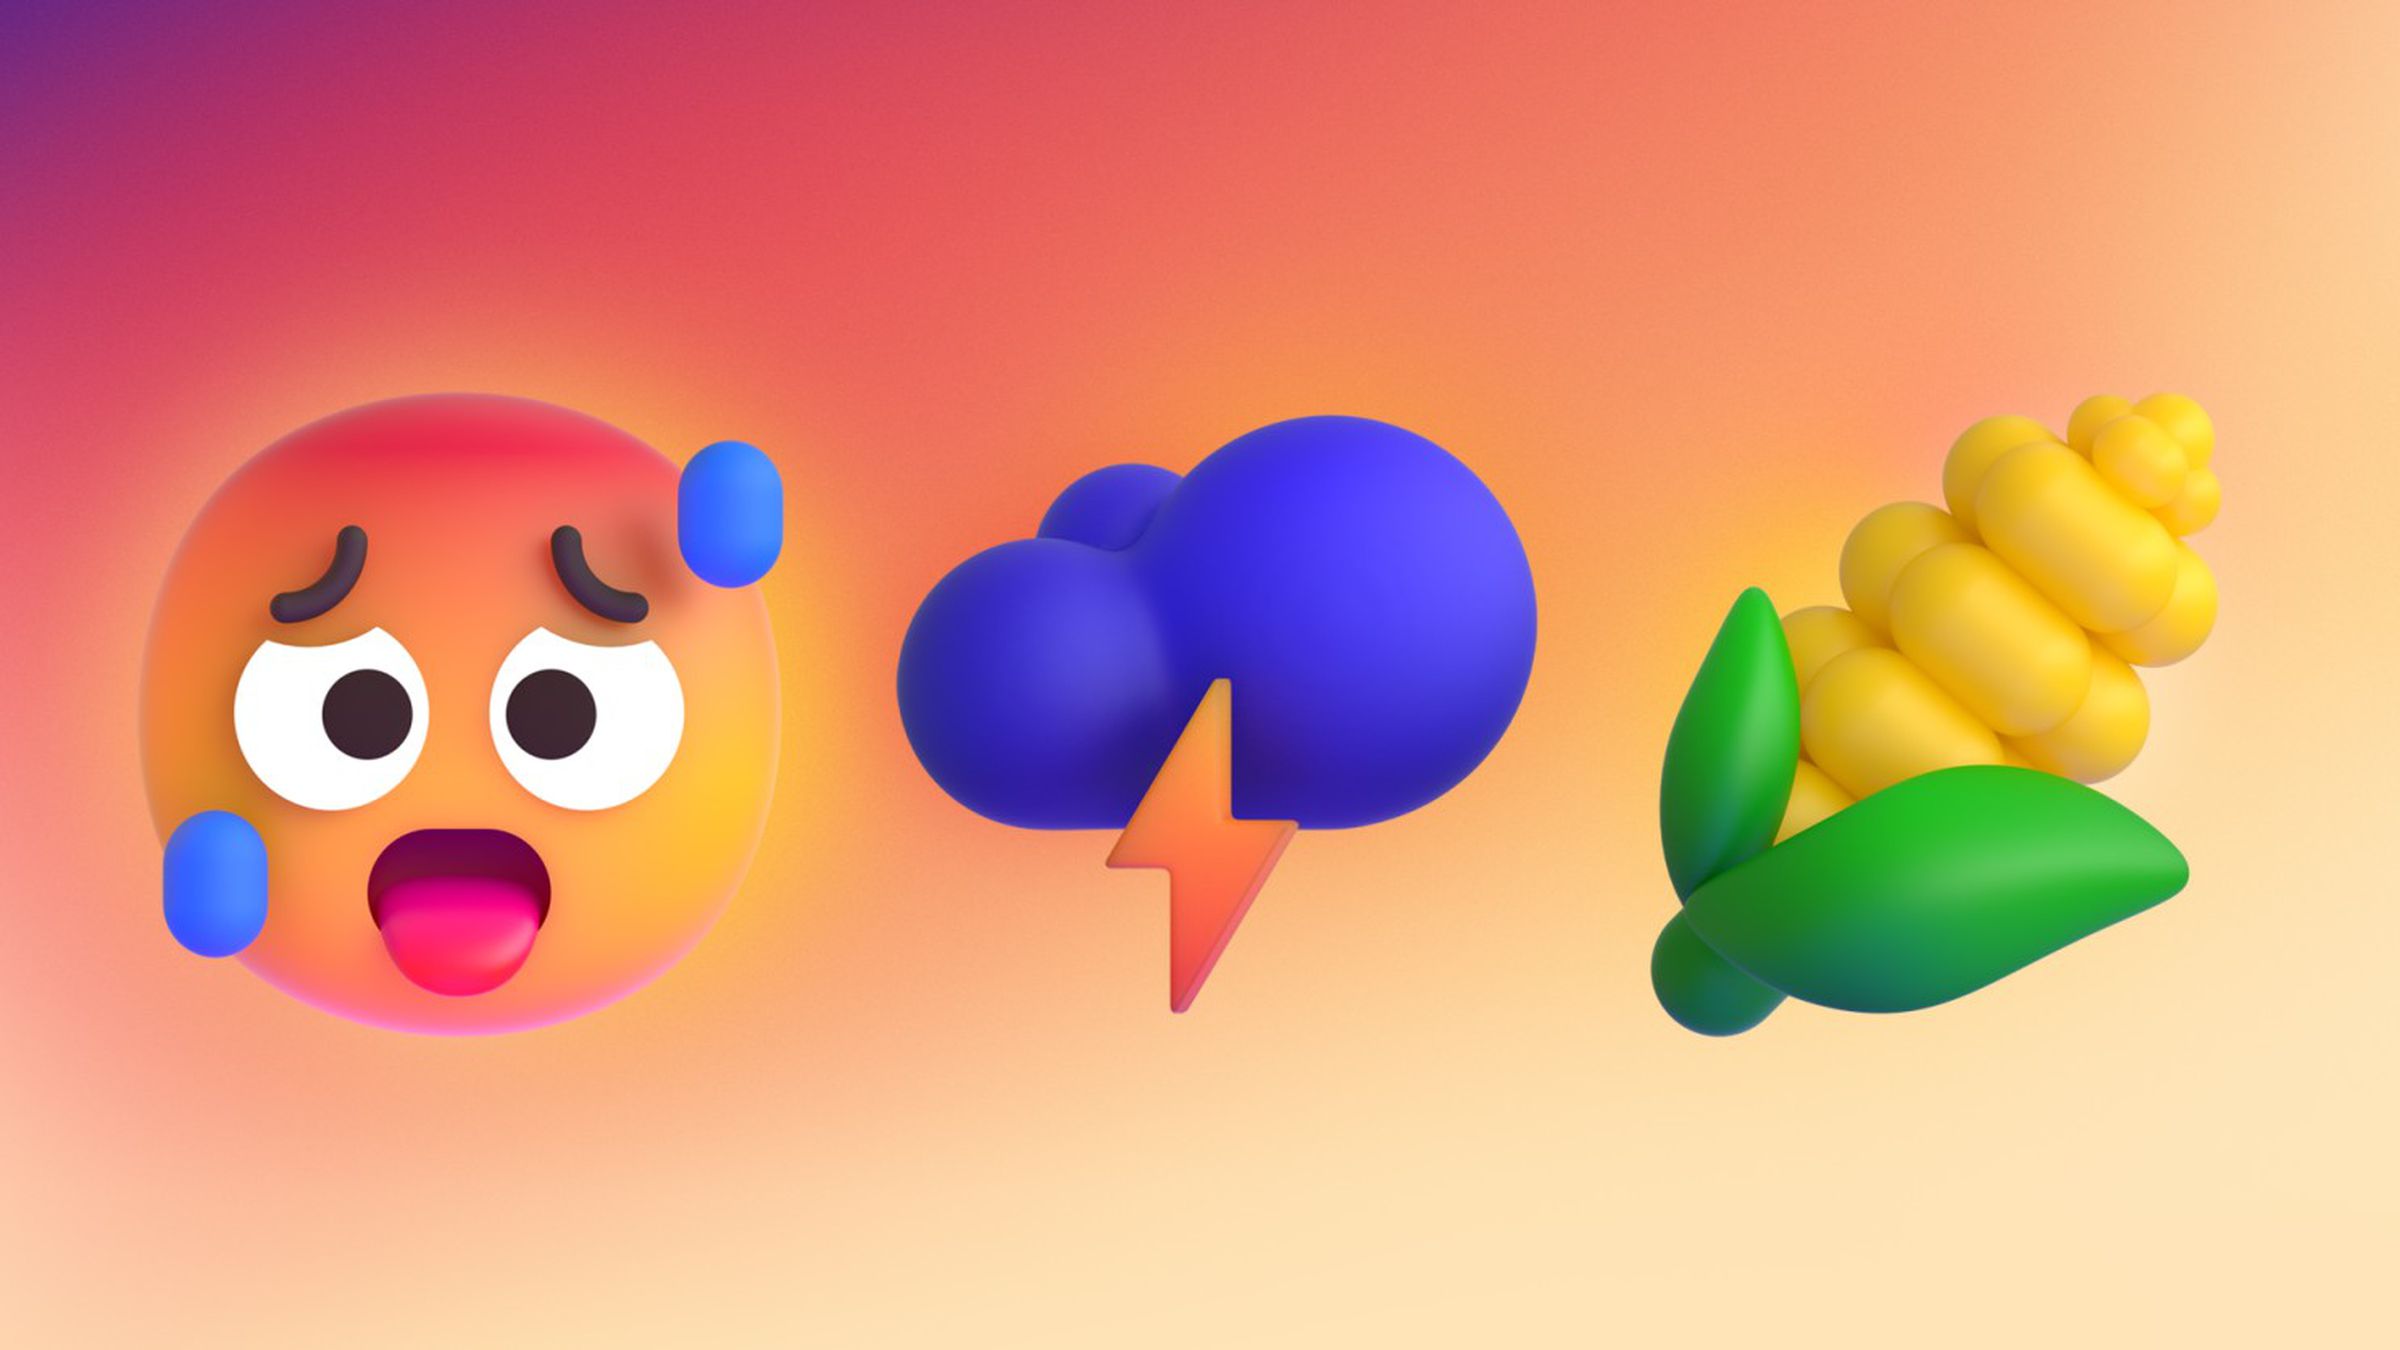 3D emoji may still be coming to Windows 11.